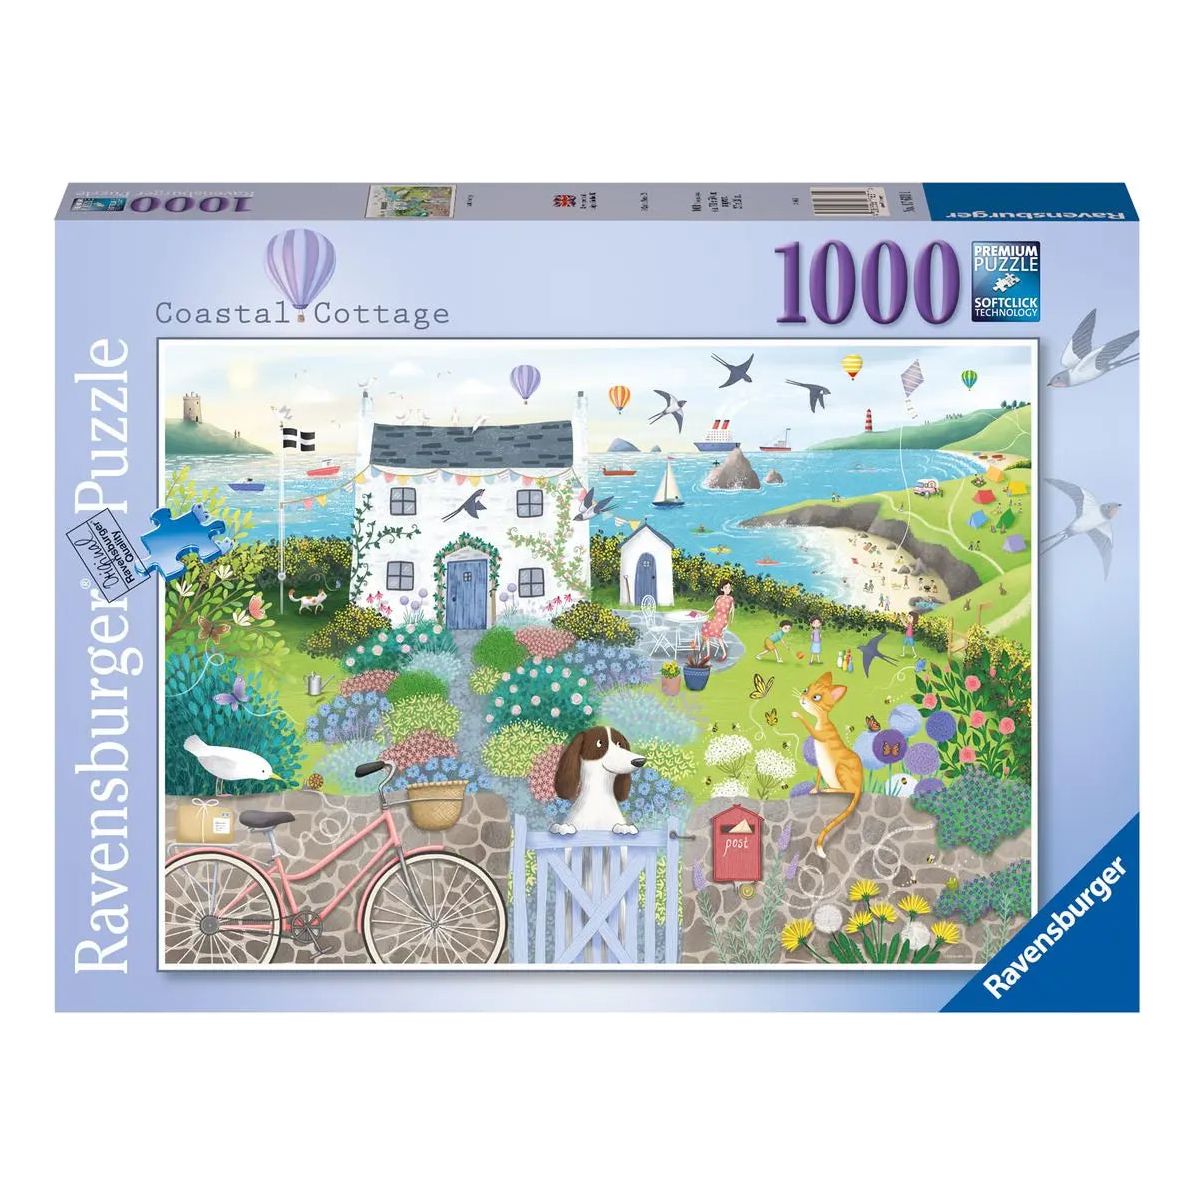 Coastal Cottage 1000 Piece Jigsaw Puzzle Ravensburger